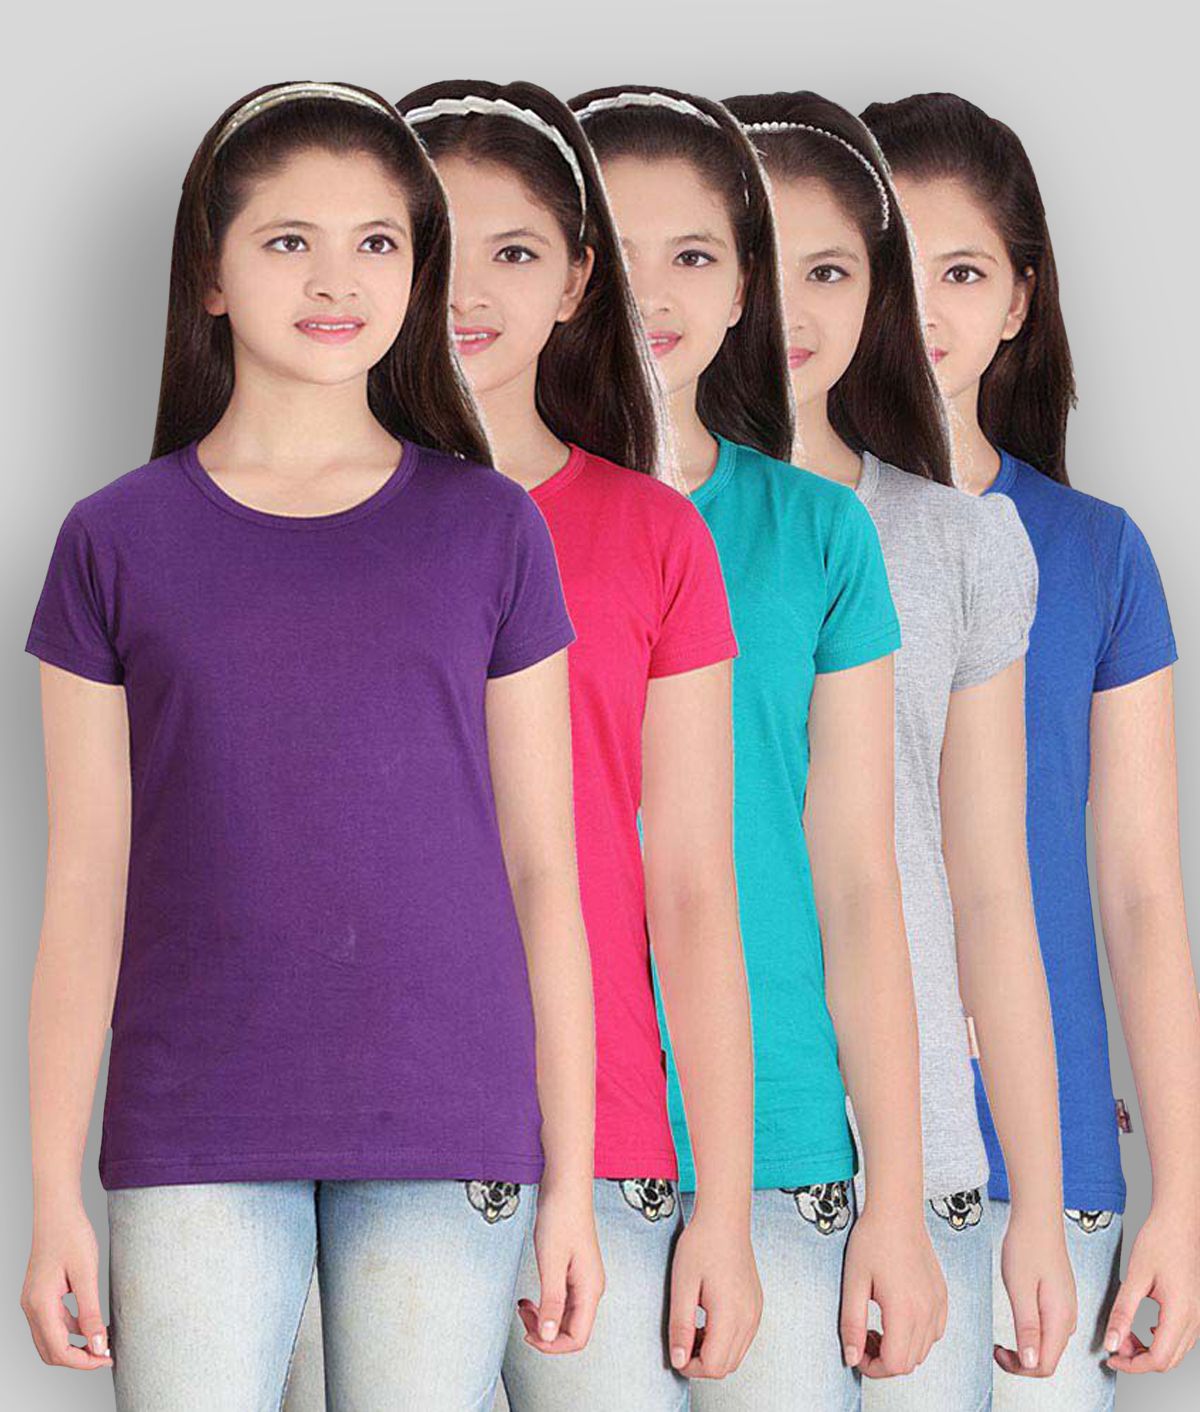     			Sini Mini - Multicolor Cotton Blend Girl's T-Shirt ( Pack of 5 )